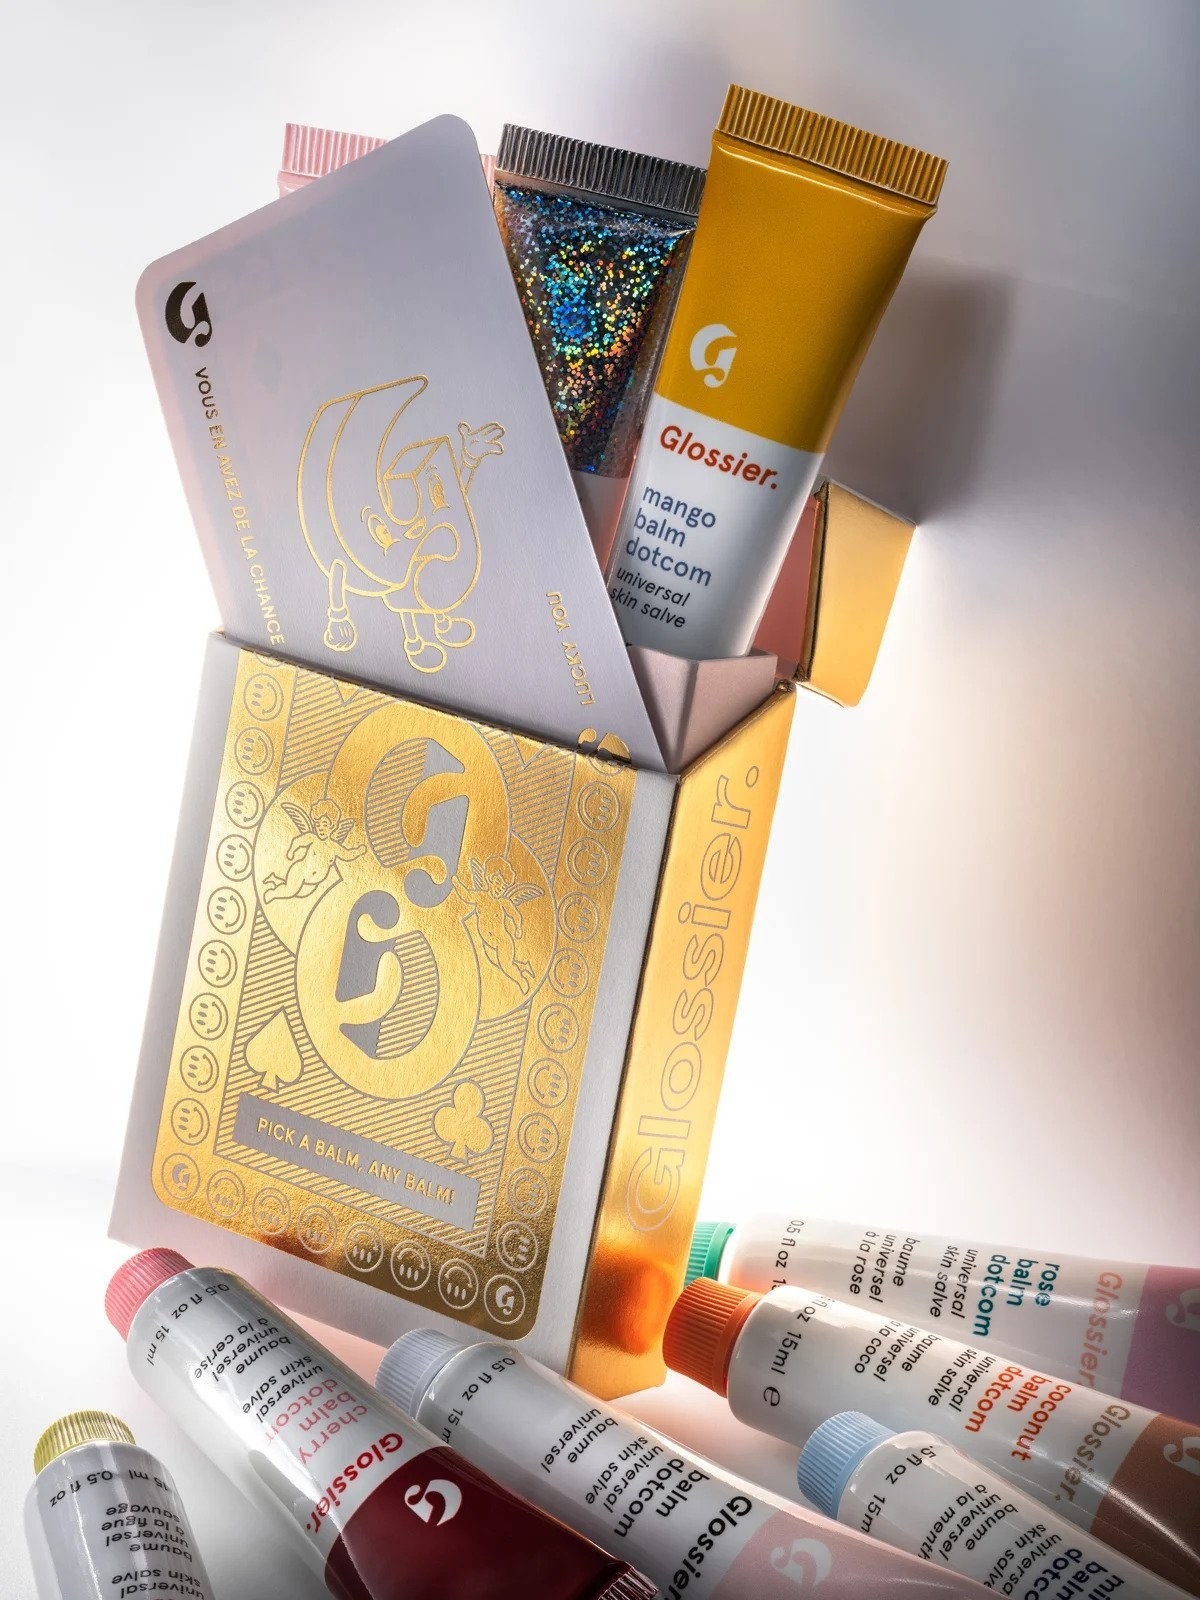 Gold and white Balm Dotcom Roulette gift box next to assorted Balm Dotcom tubes